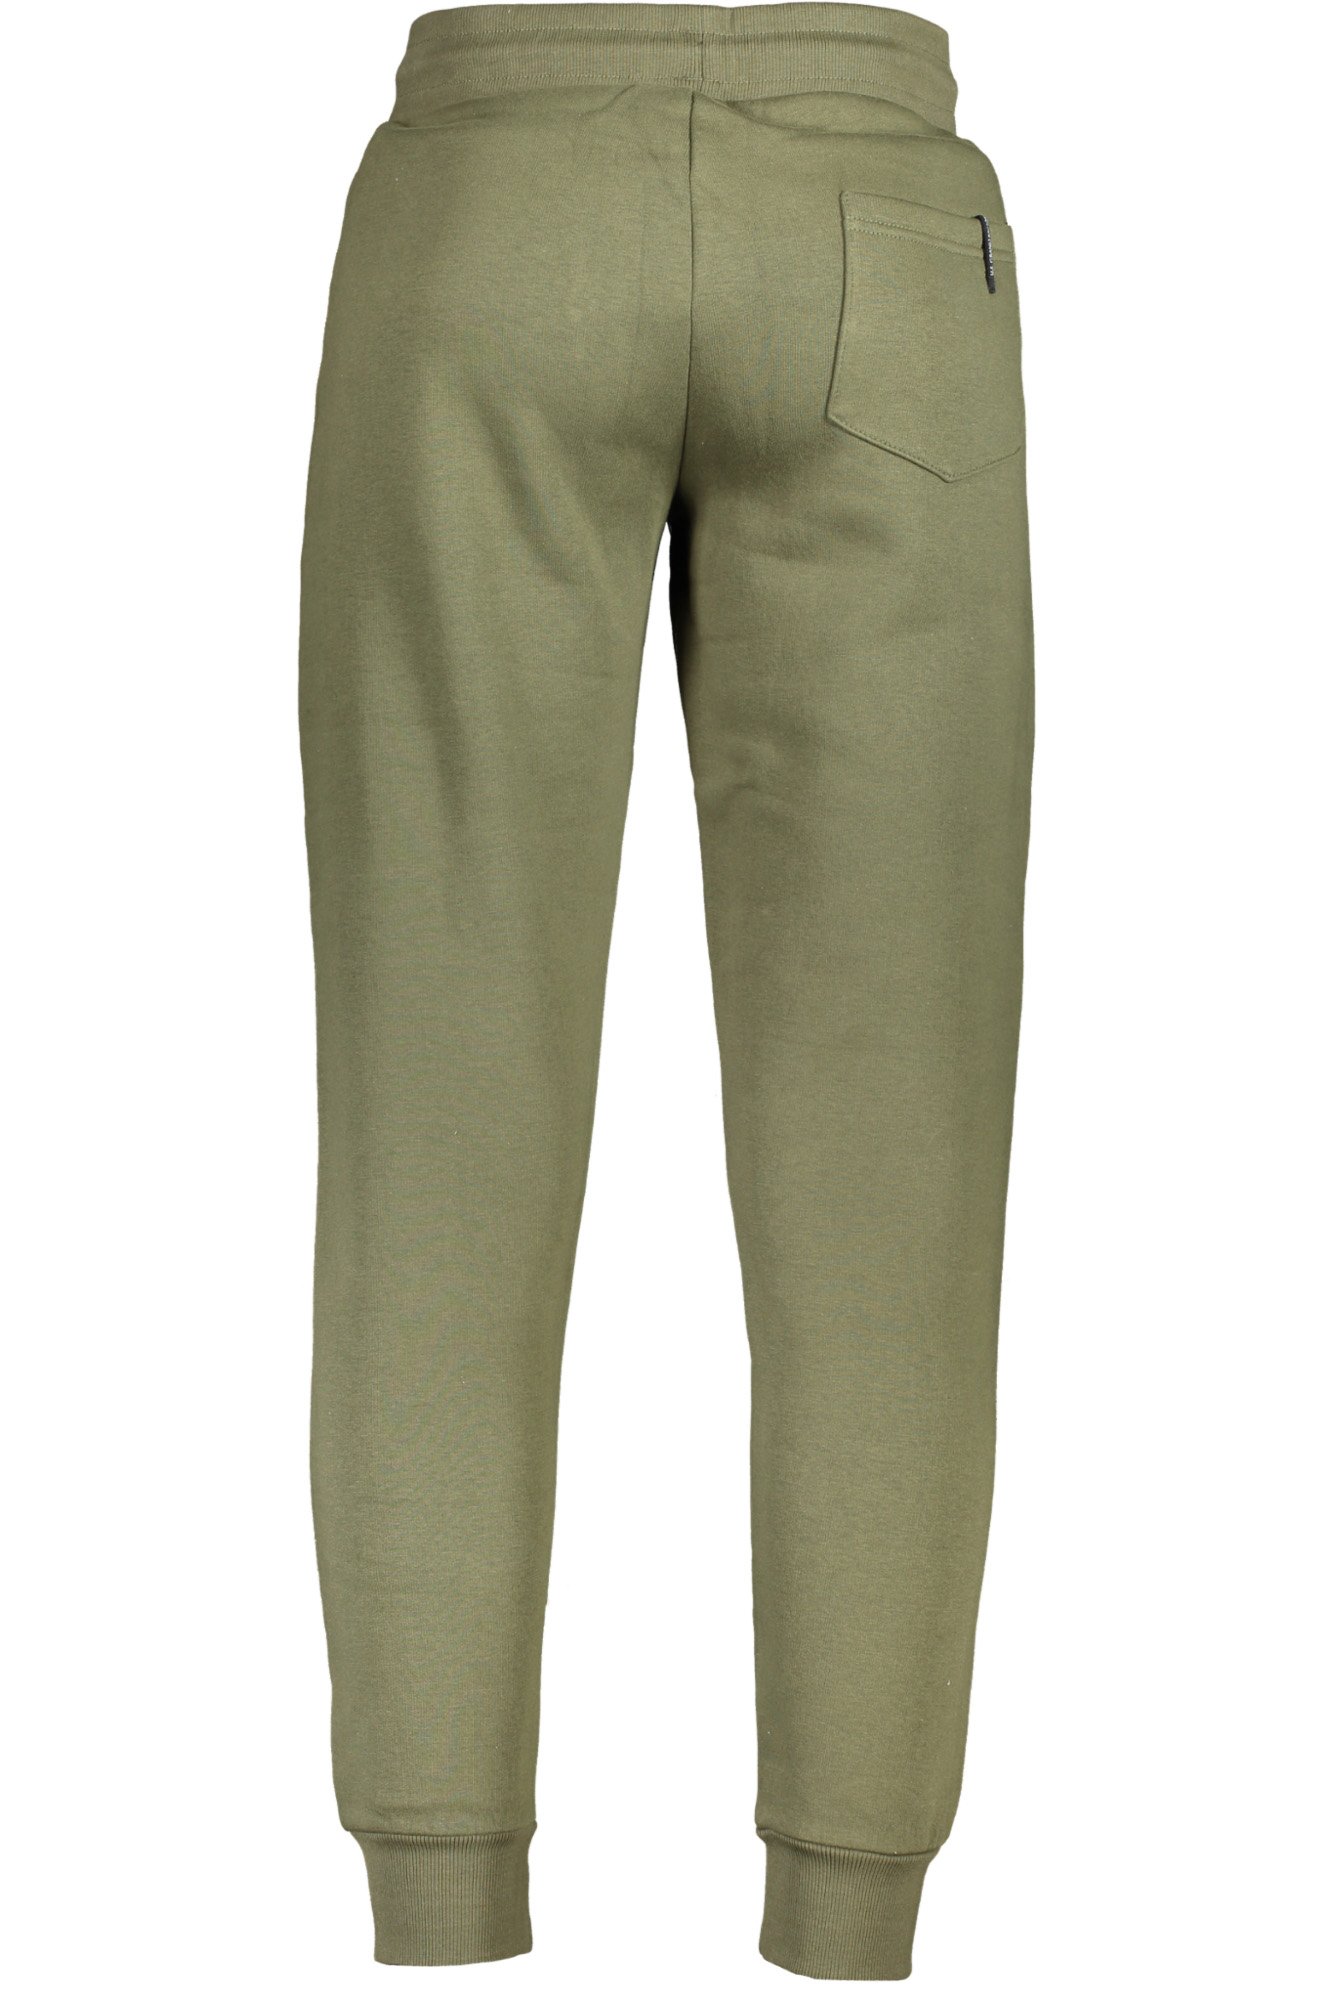 Pantalons sport/streetwear  U.s. grand polo USL180 V.MILITARE